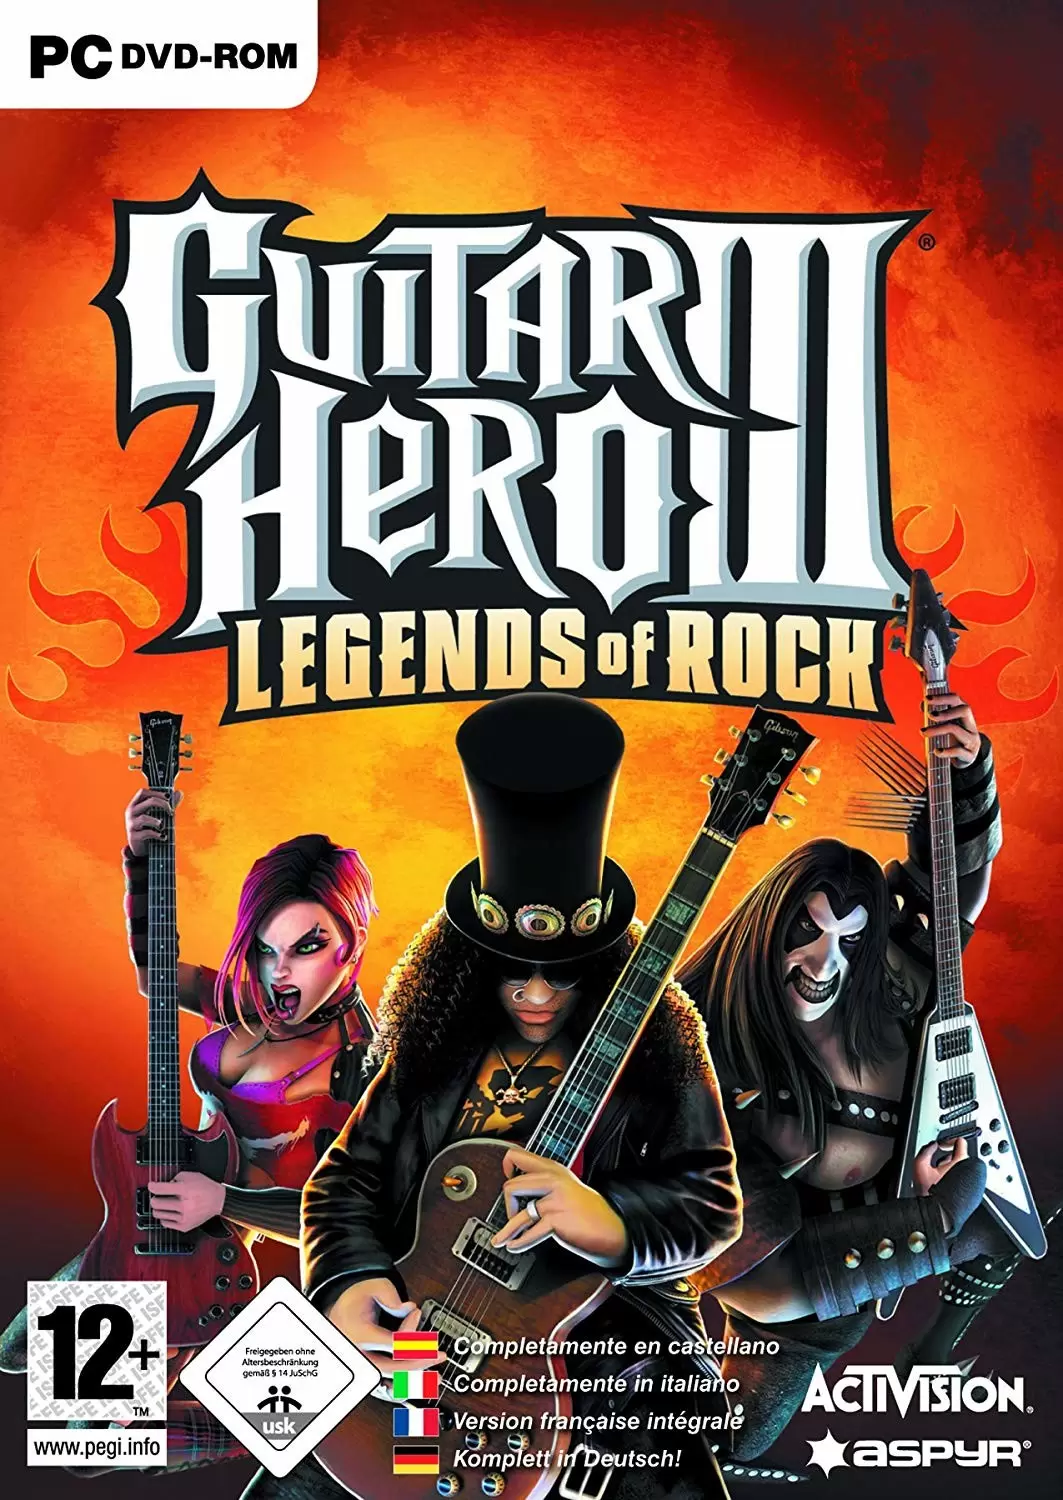 Guitar Hero 3 with Guitar PC Game 